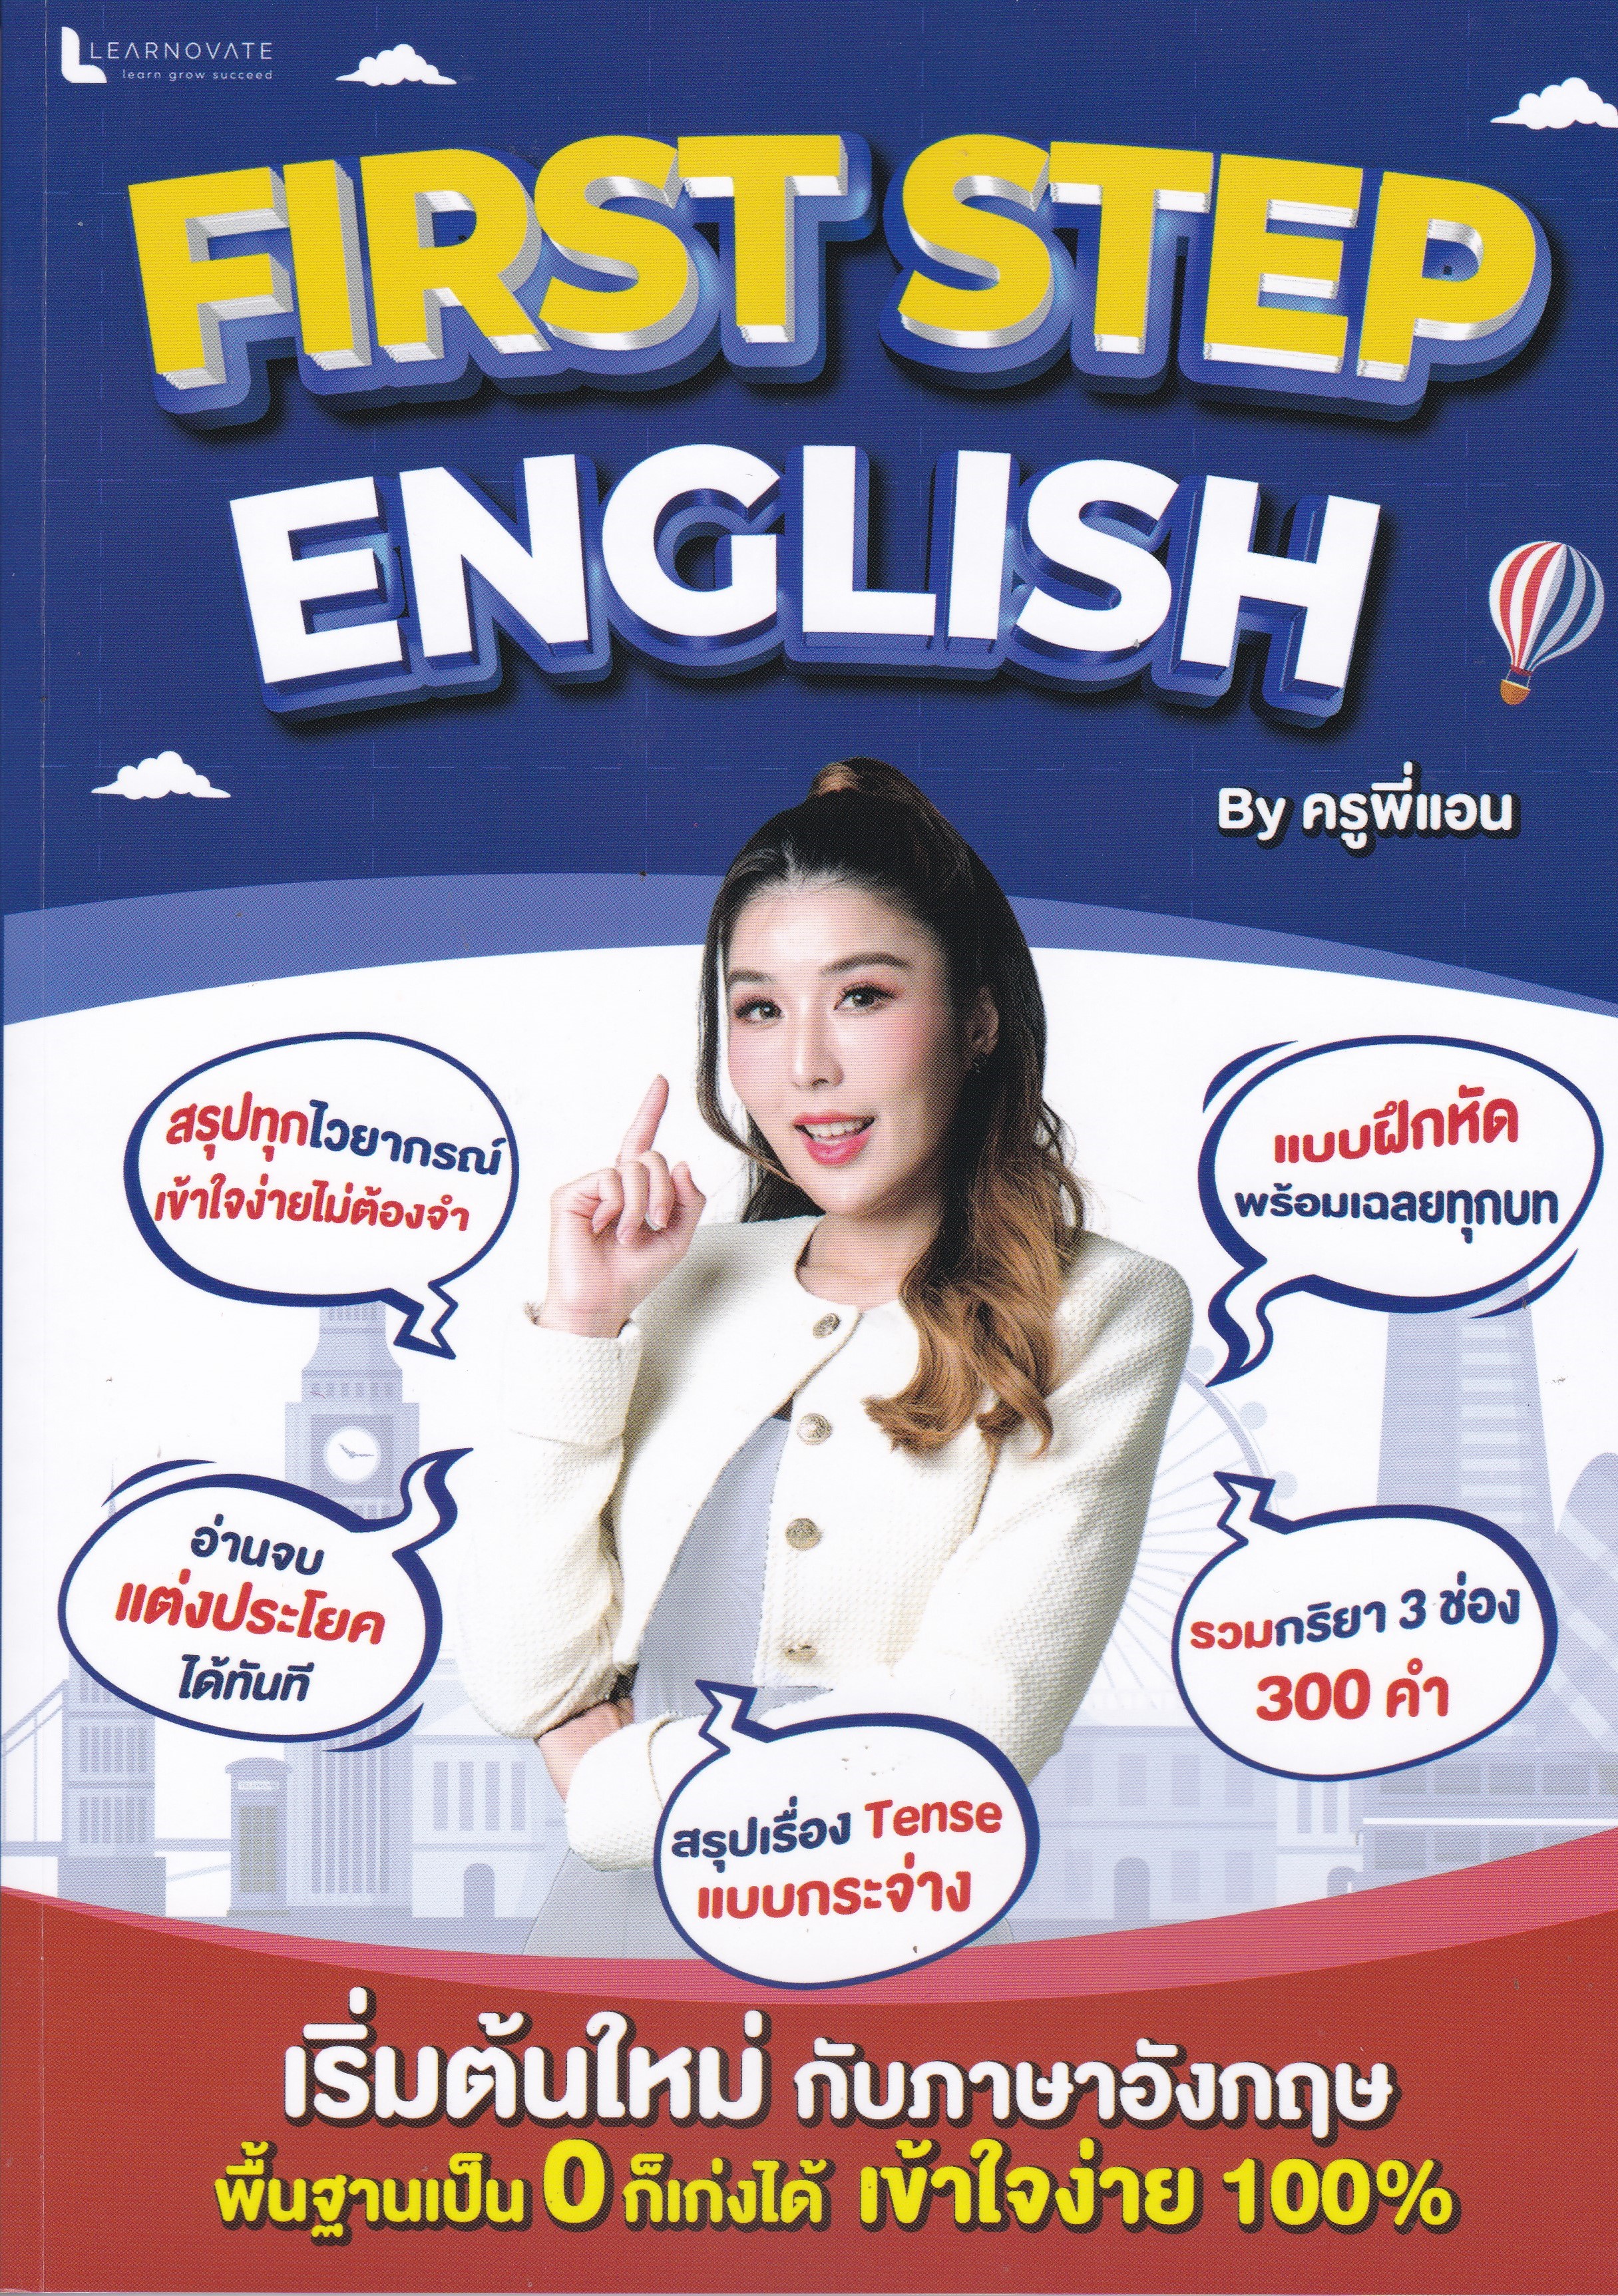 FIRST STEP ENGLISH BY ครูพี่แอน